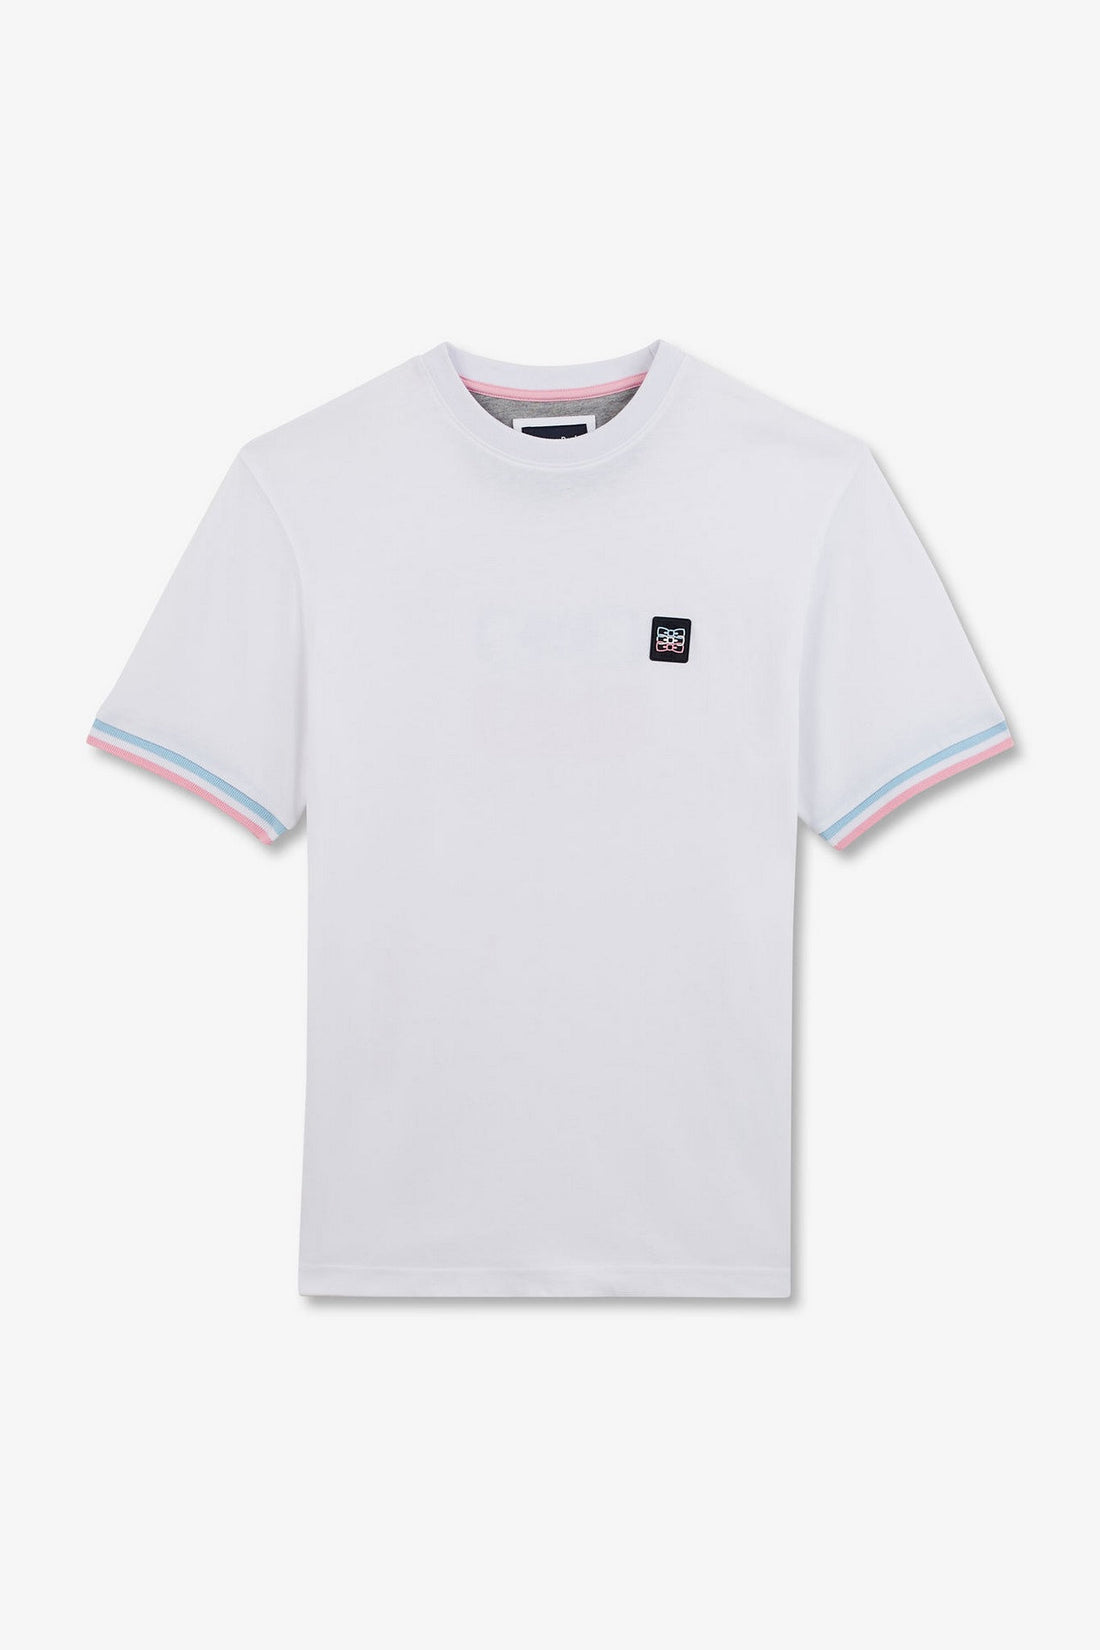 White Short-Sleeved T-Shirt With Embossed Logo_E24MAITC0043_BC_02